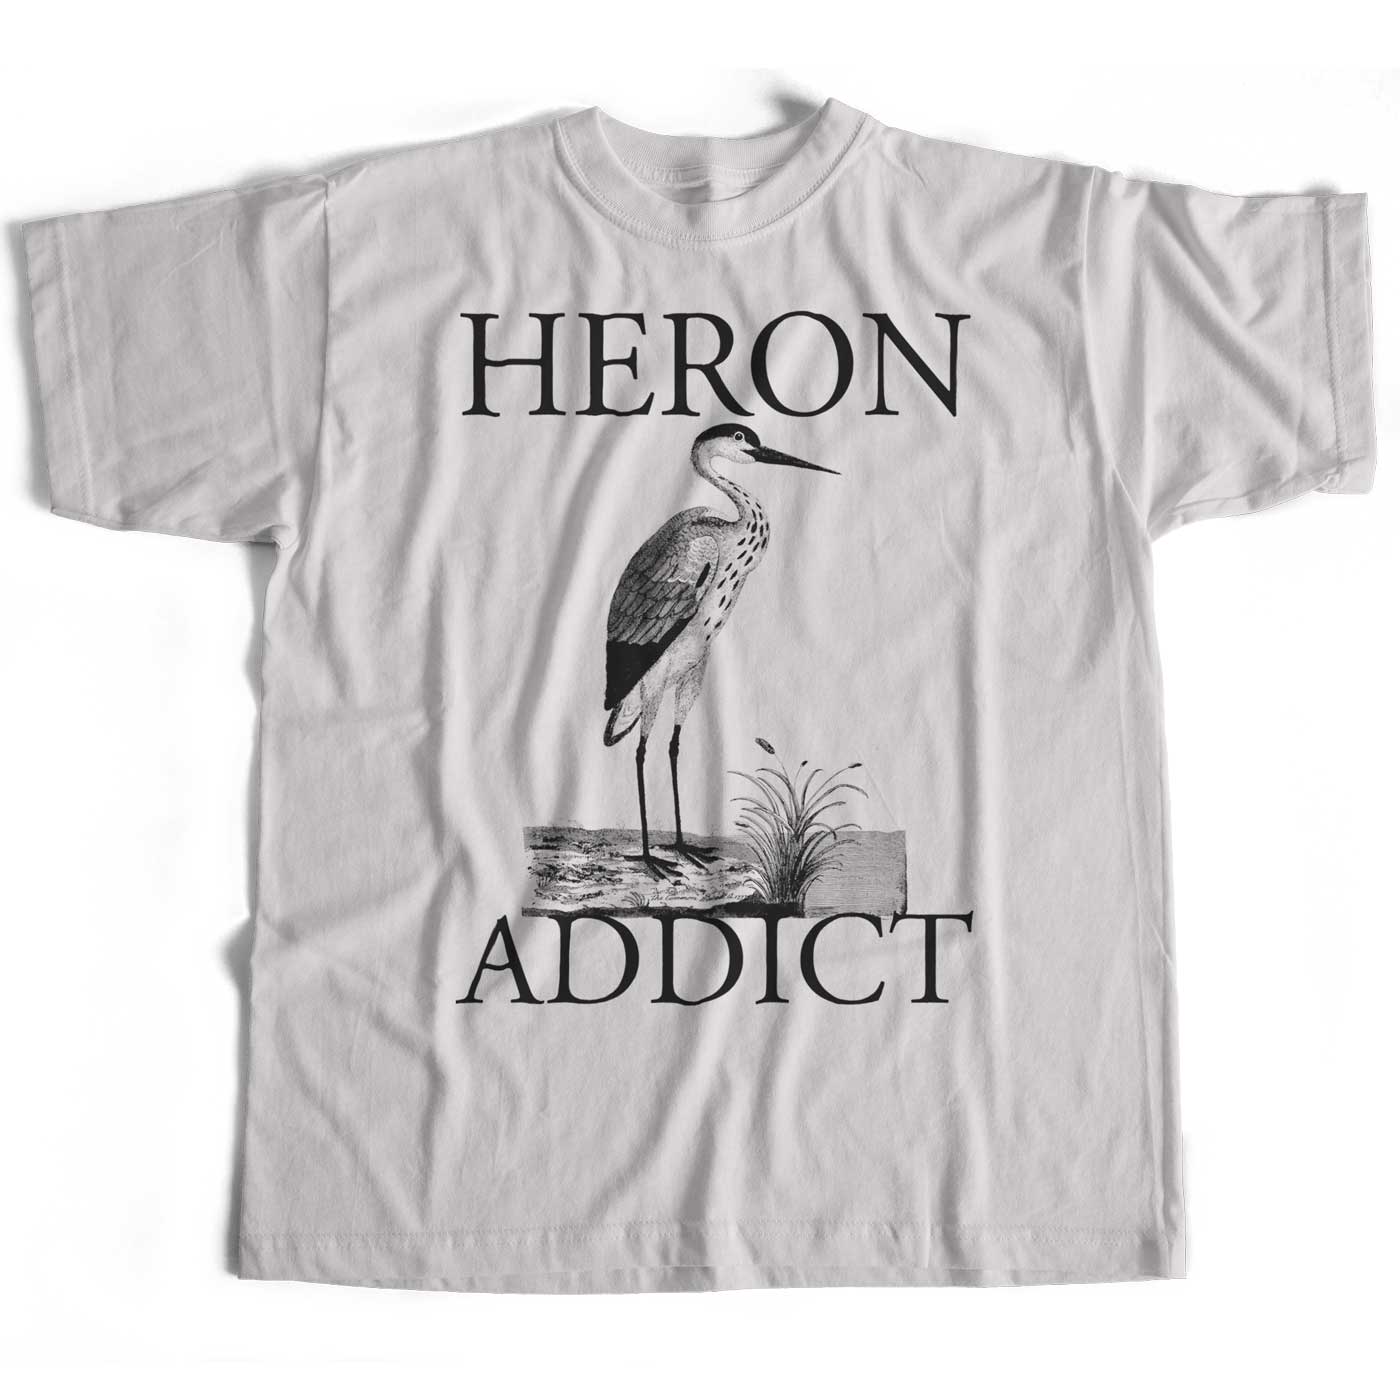 Heron Addict T Shirt - An Old Skool Hooligans Birdwatching Ornithological Original